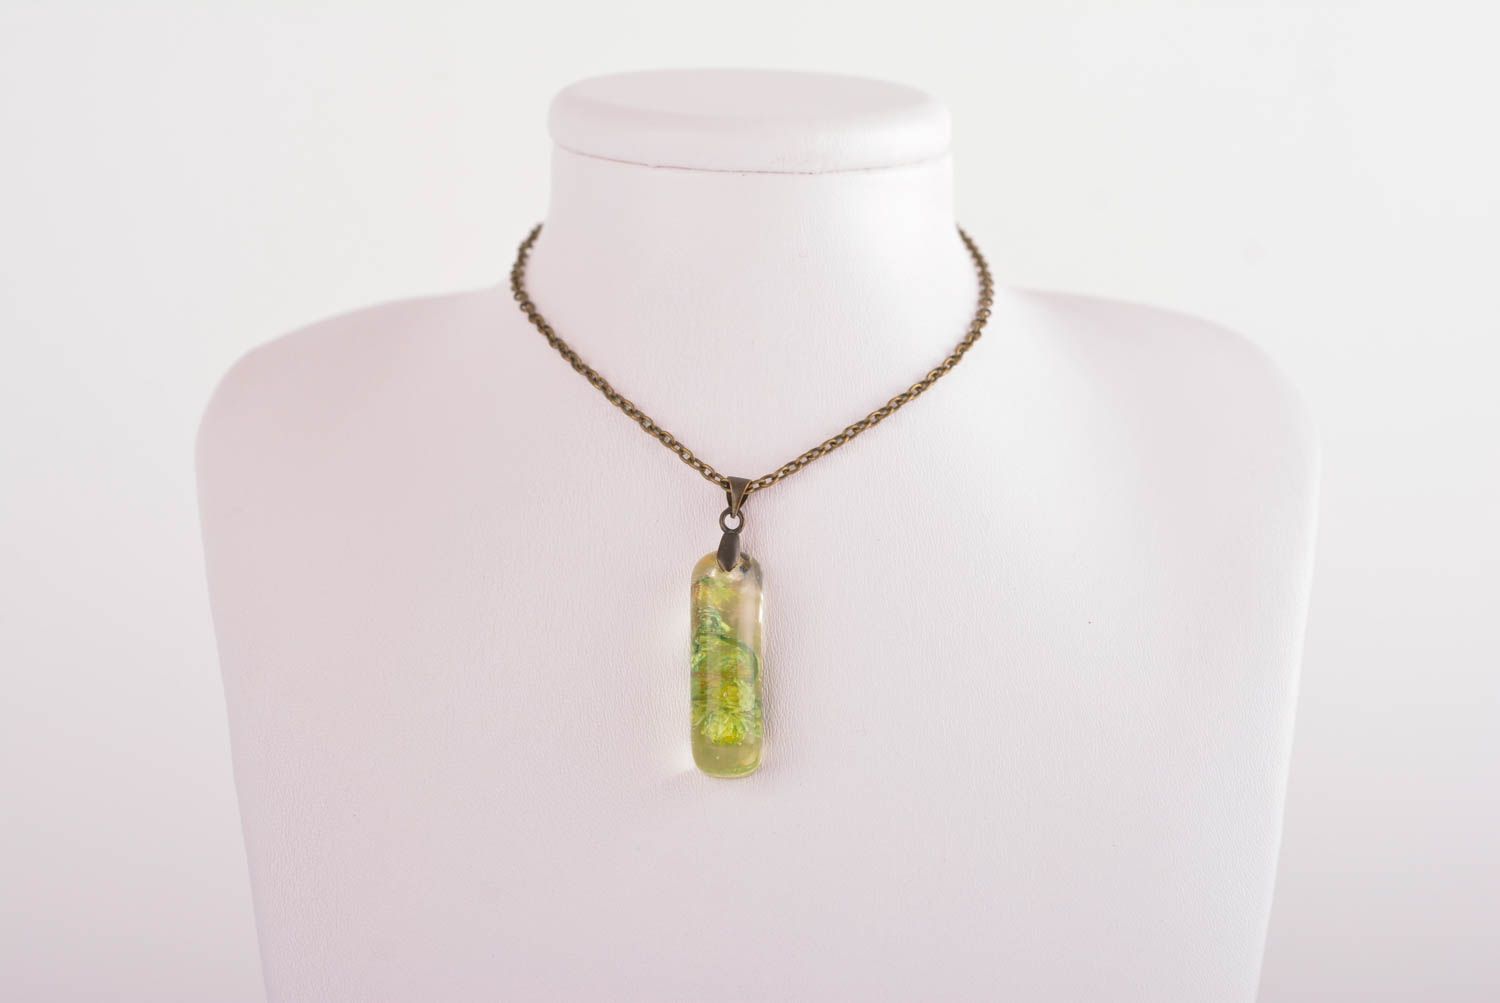 Handmade pendant unusual pendant designer accessory gift ideas epoxy jewelry photo 3